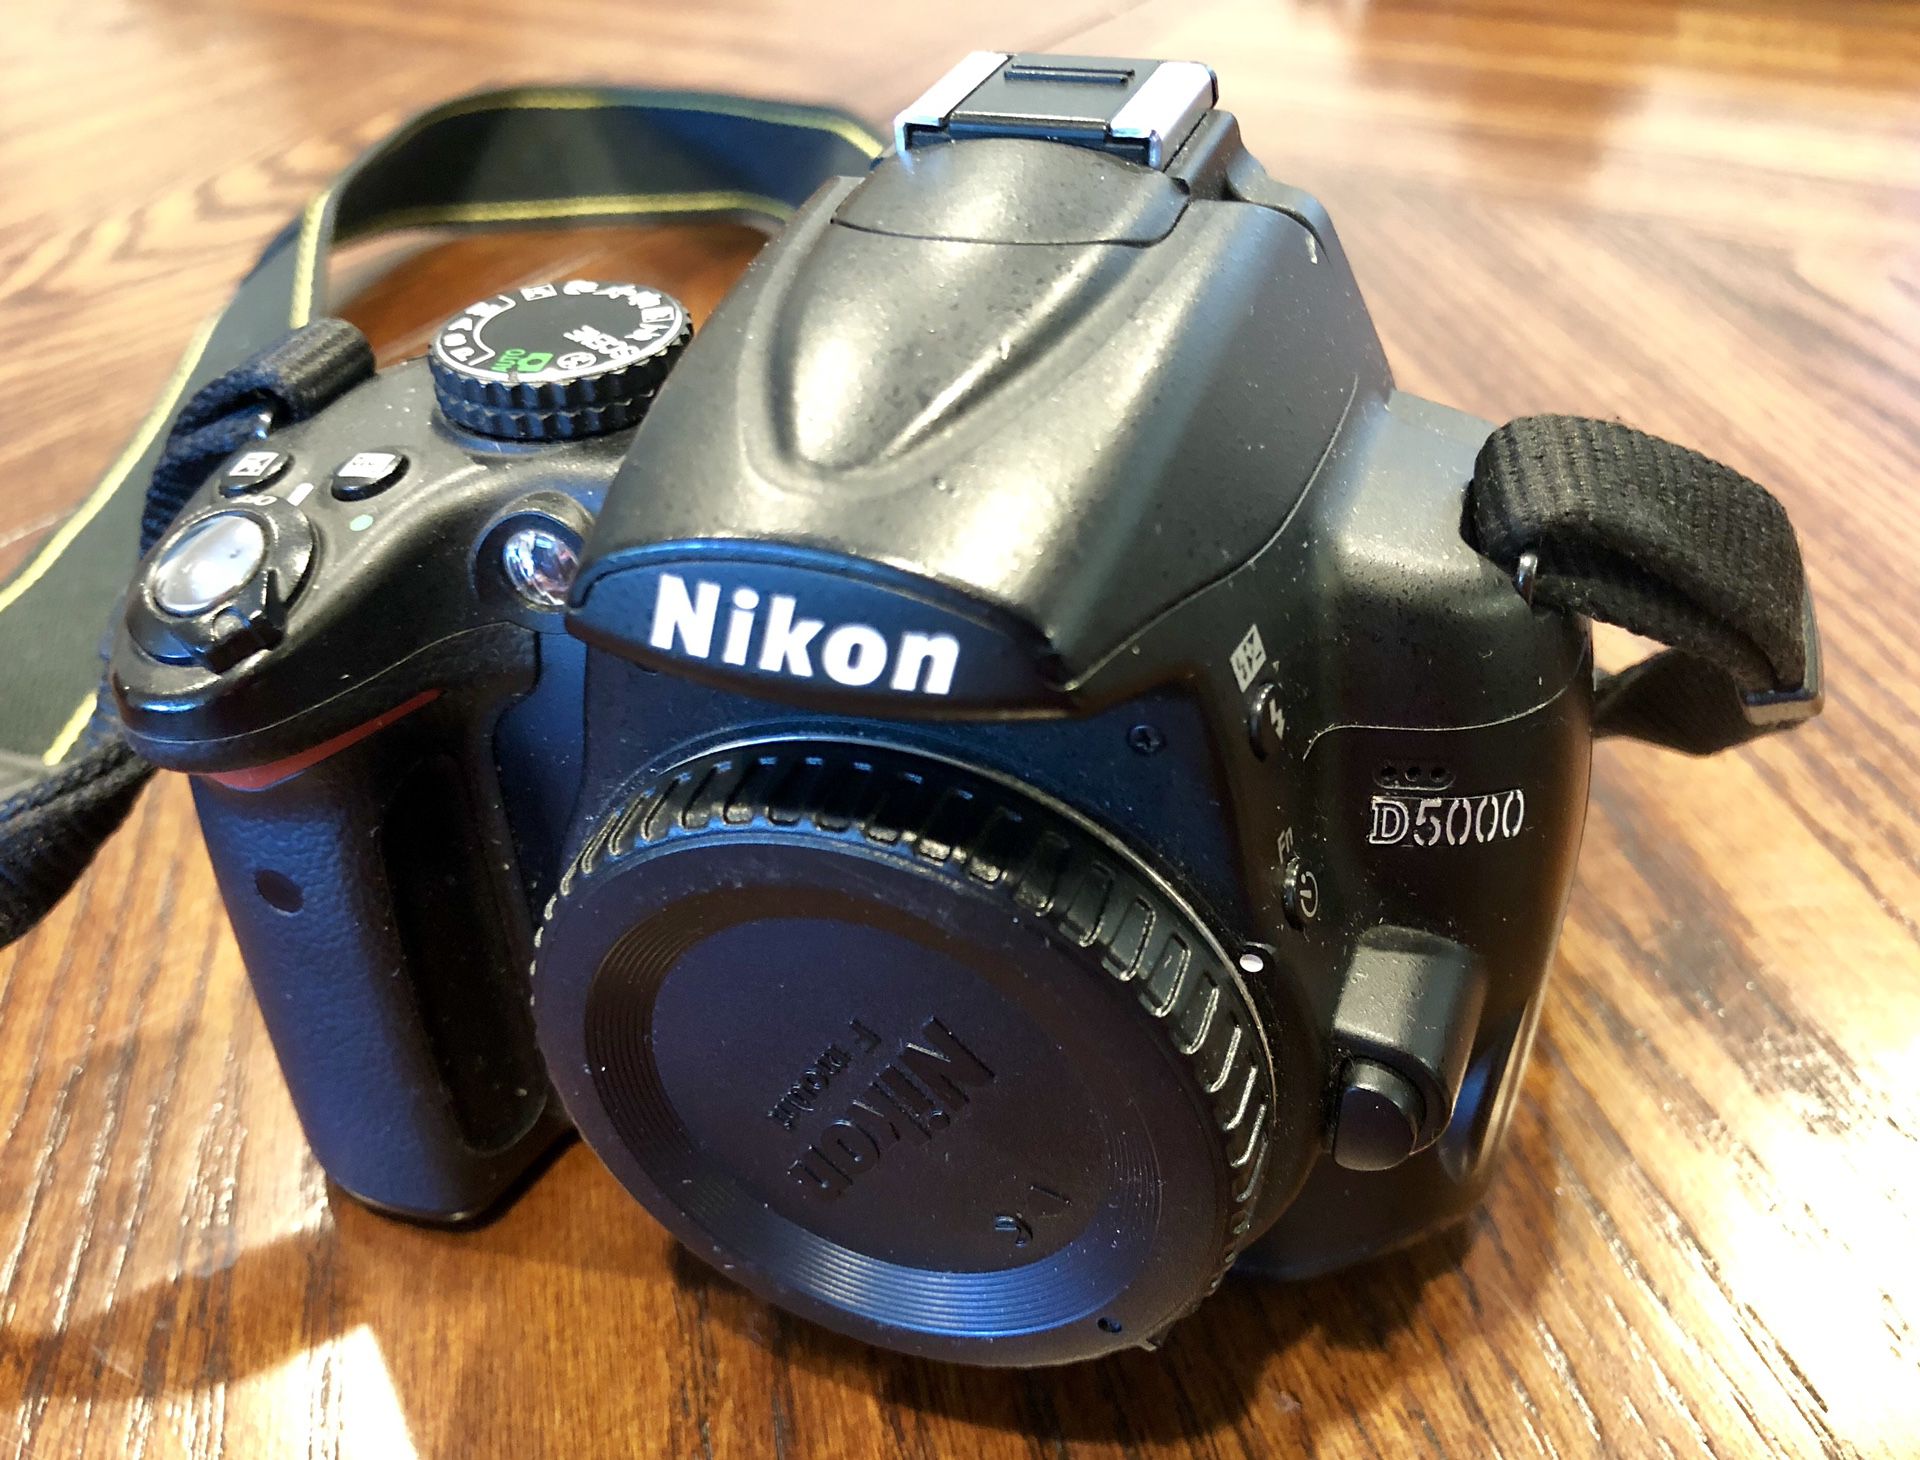 Nikon D5000 DSLR camera body